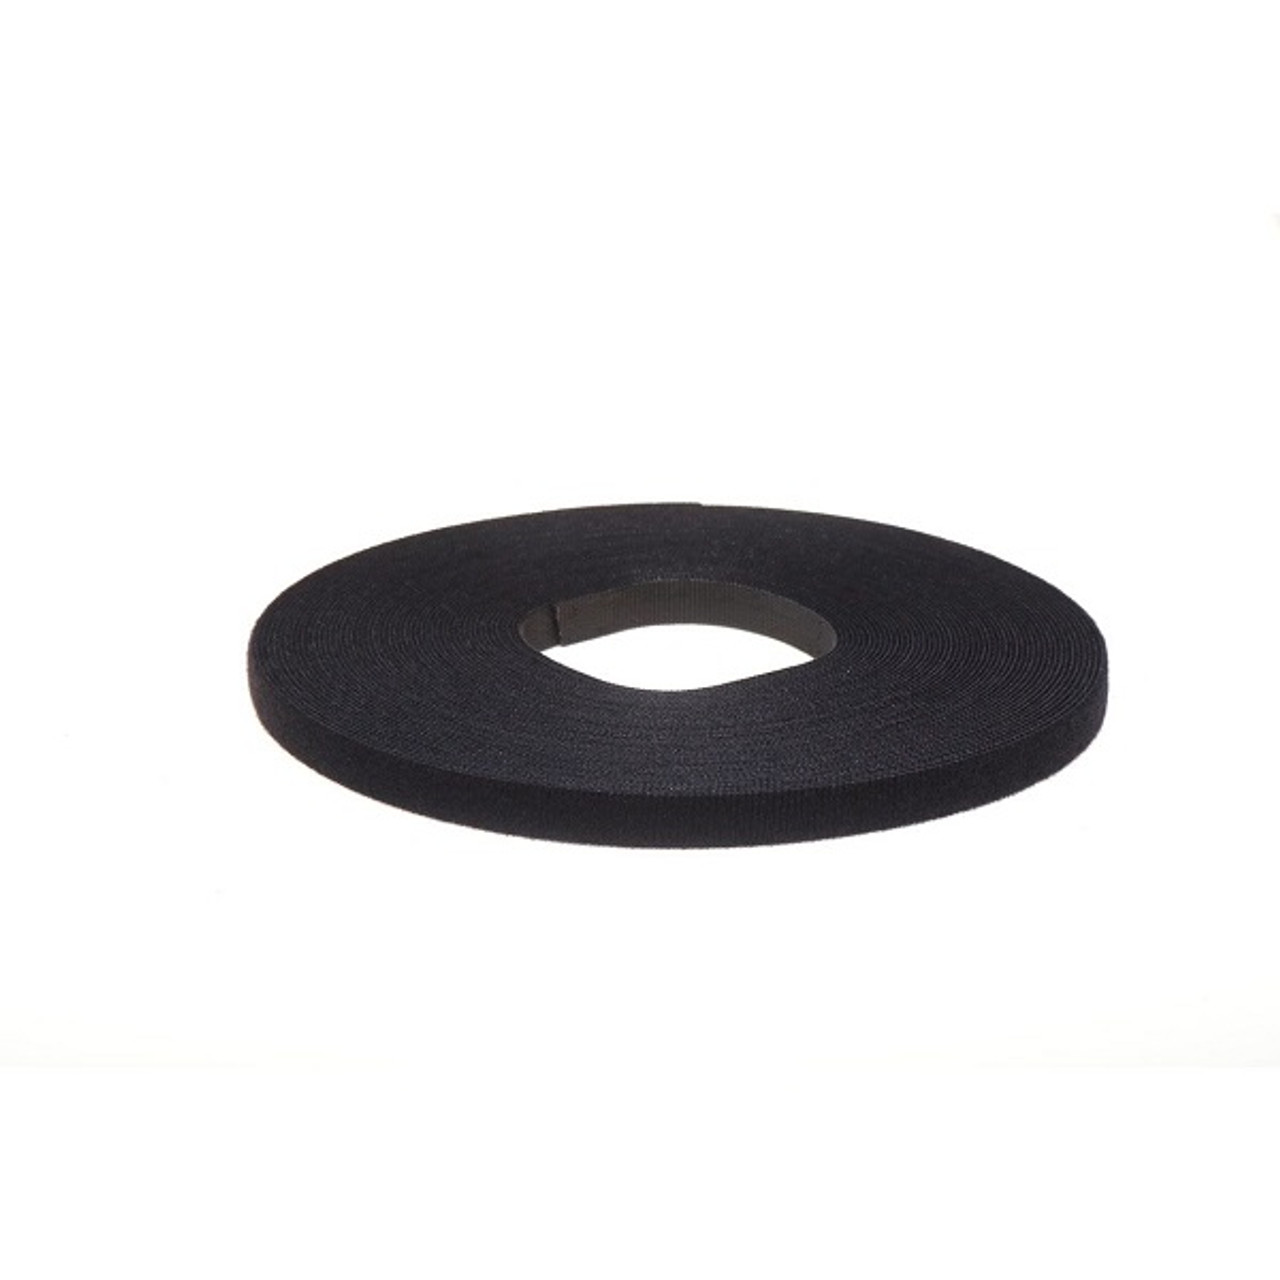 VELCRO® Brand ONE-WRAP® Tape 3/4 x 25 yard roll